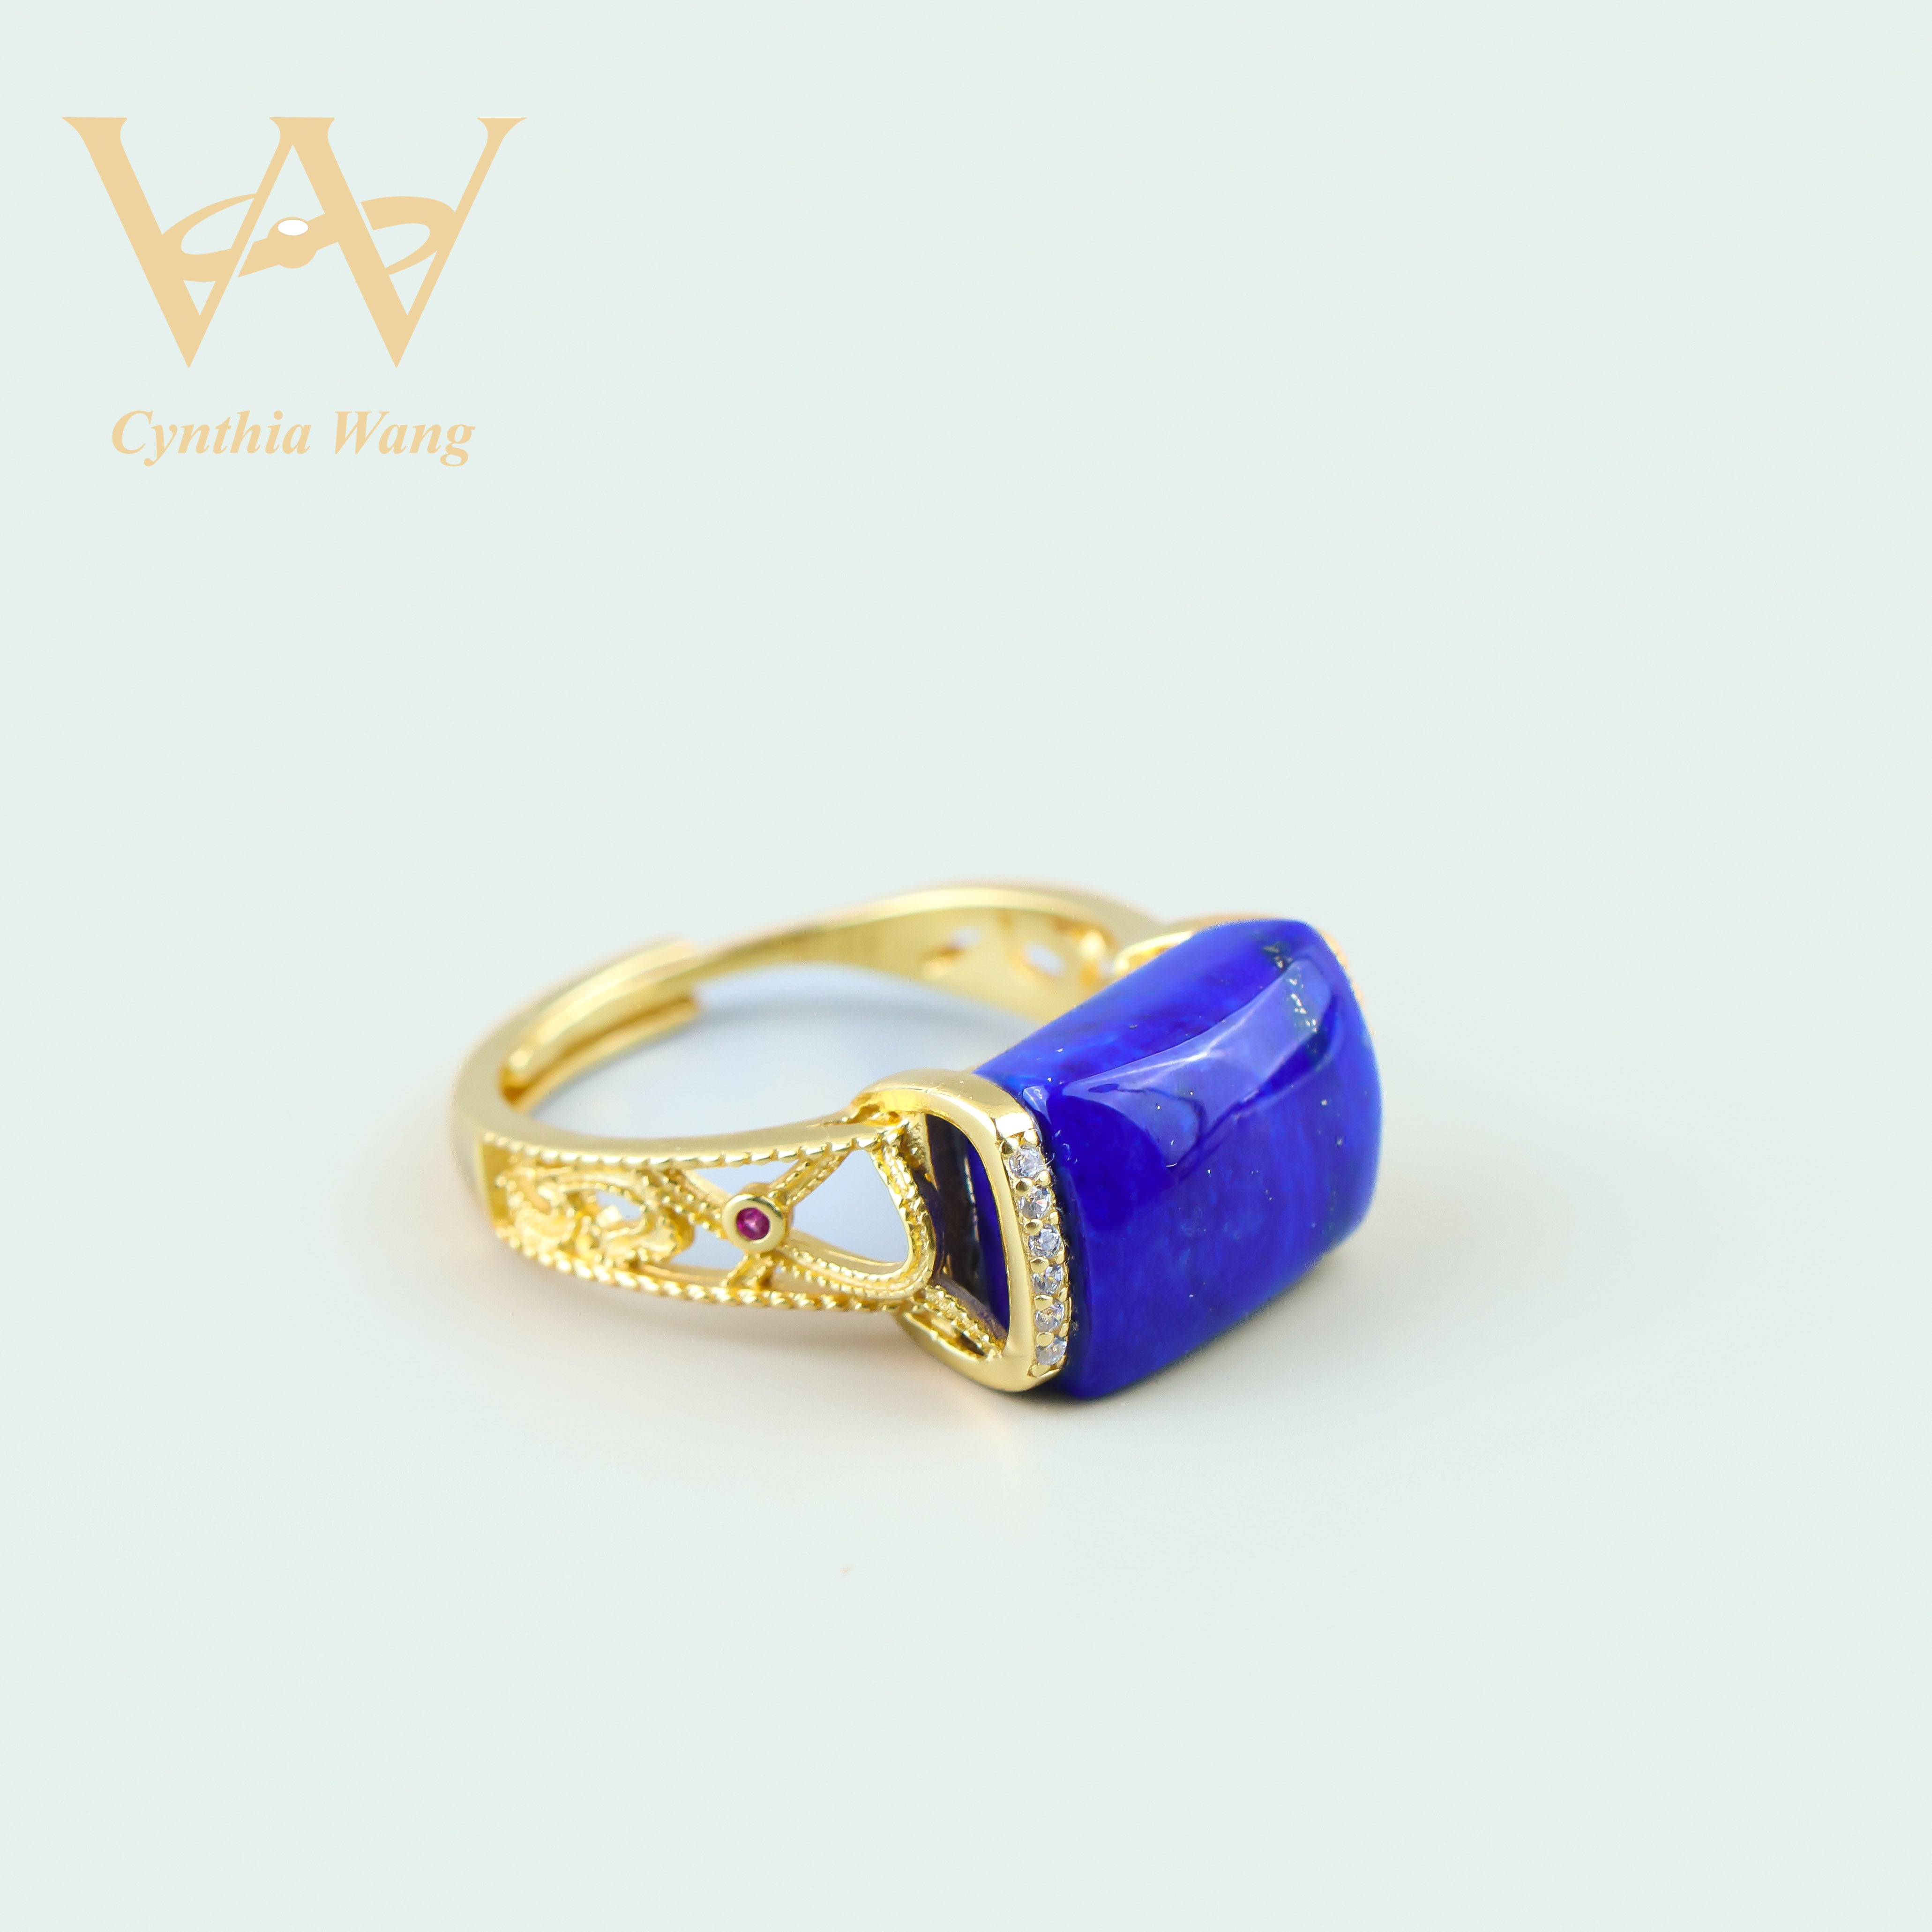 'Twilight Whispers' Lapis Lazuli Ring